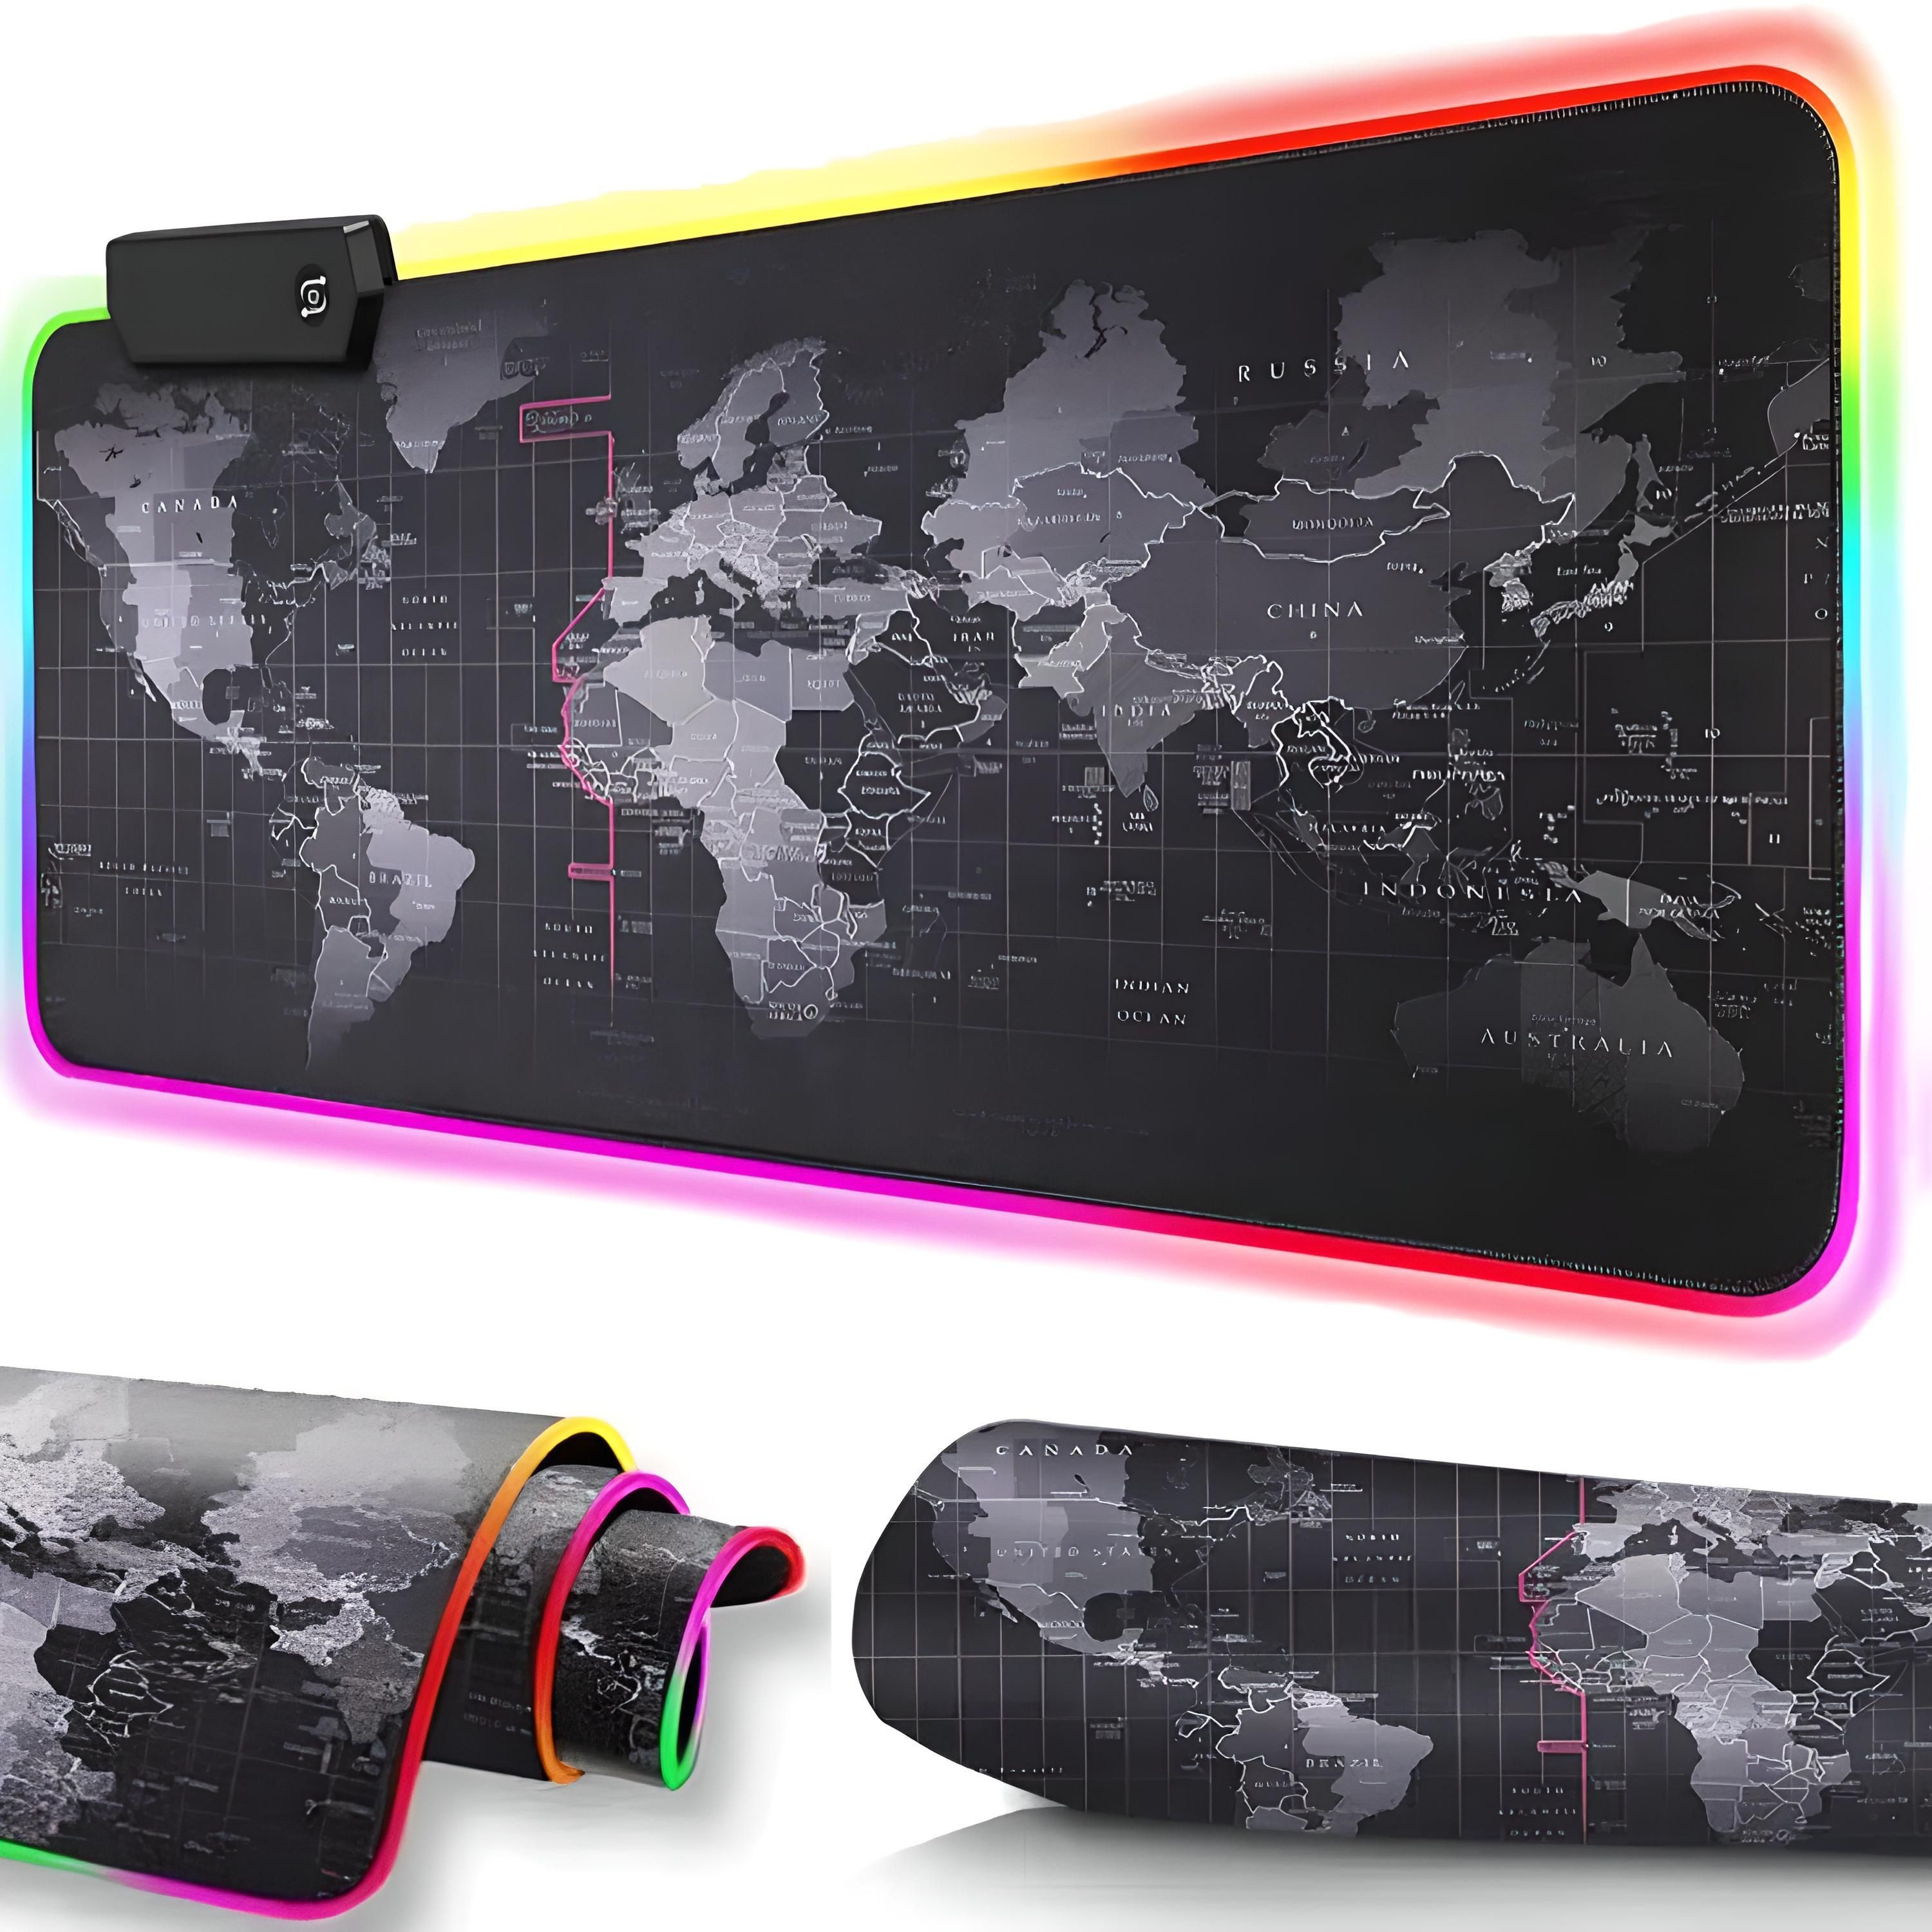 Retoo Mauspad Gaming Mauspad Weltkarte RGB LED Mouse Pad Beleuchtung Modi (Set, Mauspad 800 mm x 300 mm mit RGB-Hintergrundbeleuchtung), RGB Gaming Mauspad mit Weltkarte, LED Schreibtischunterlage